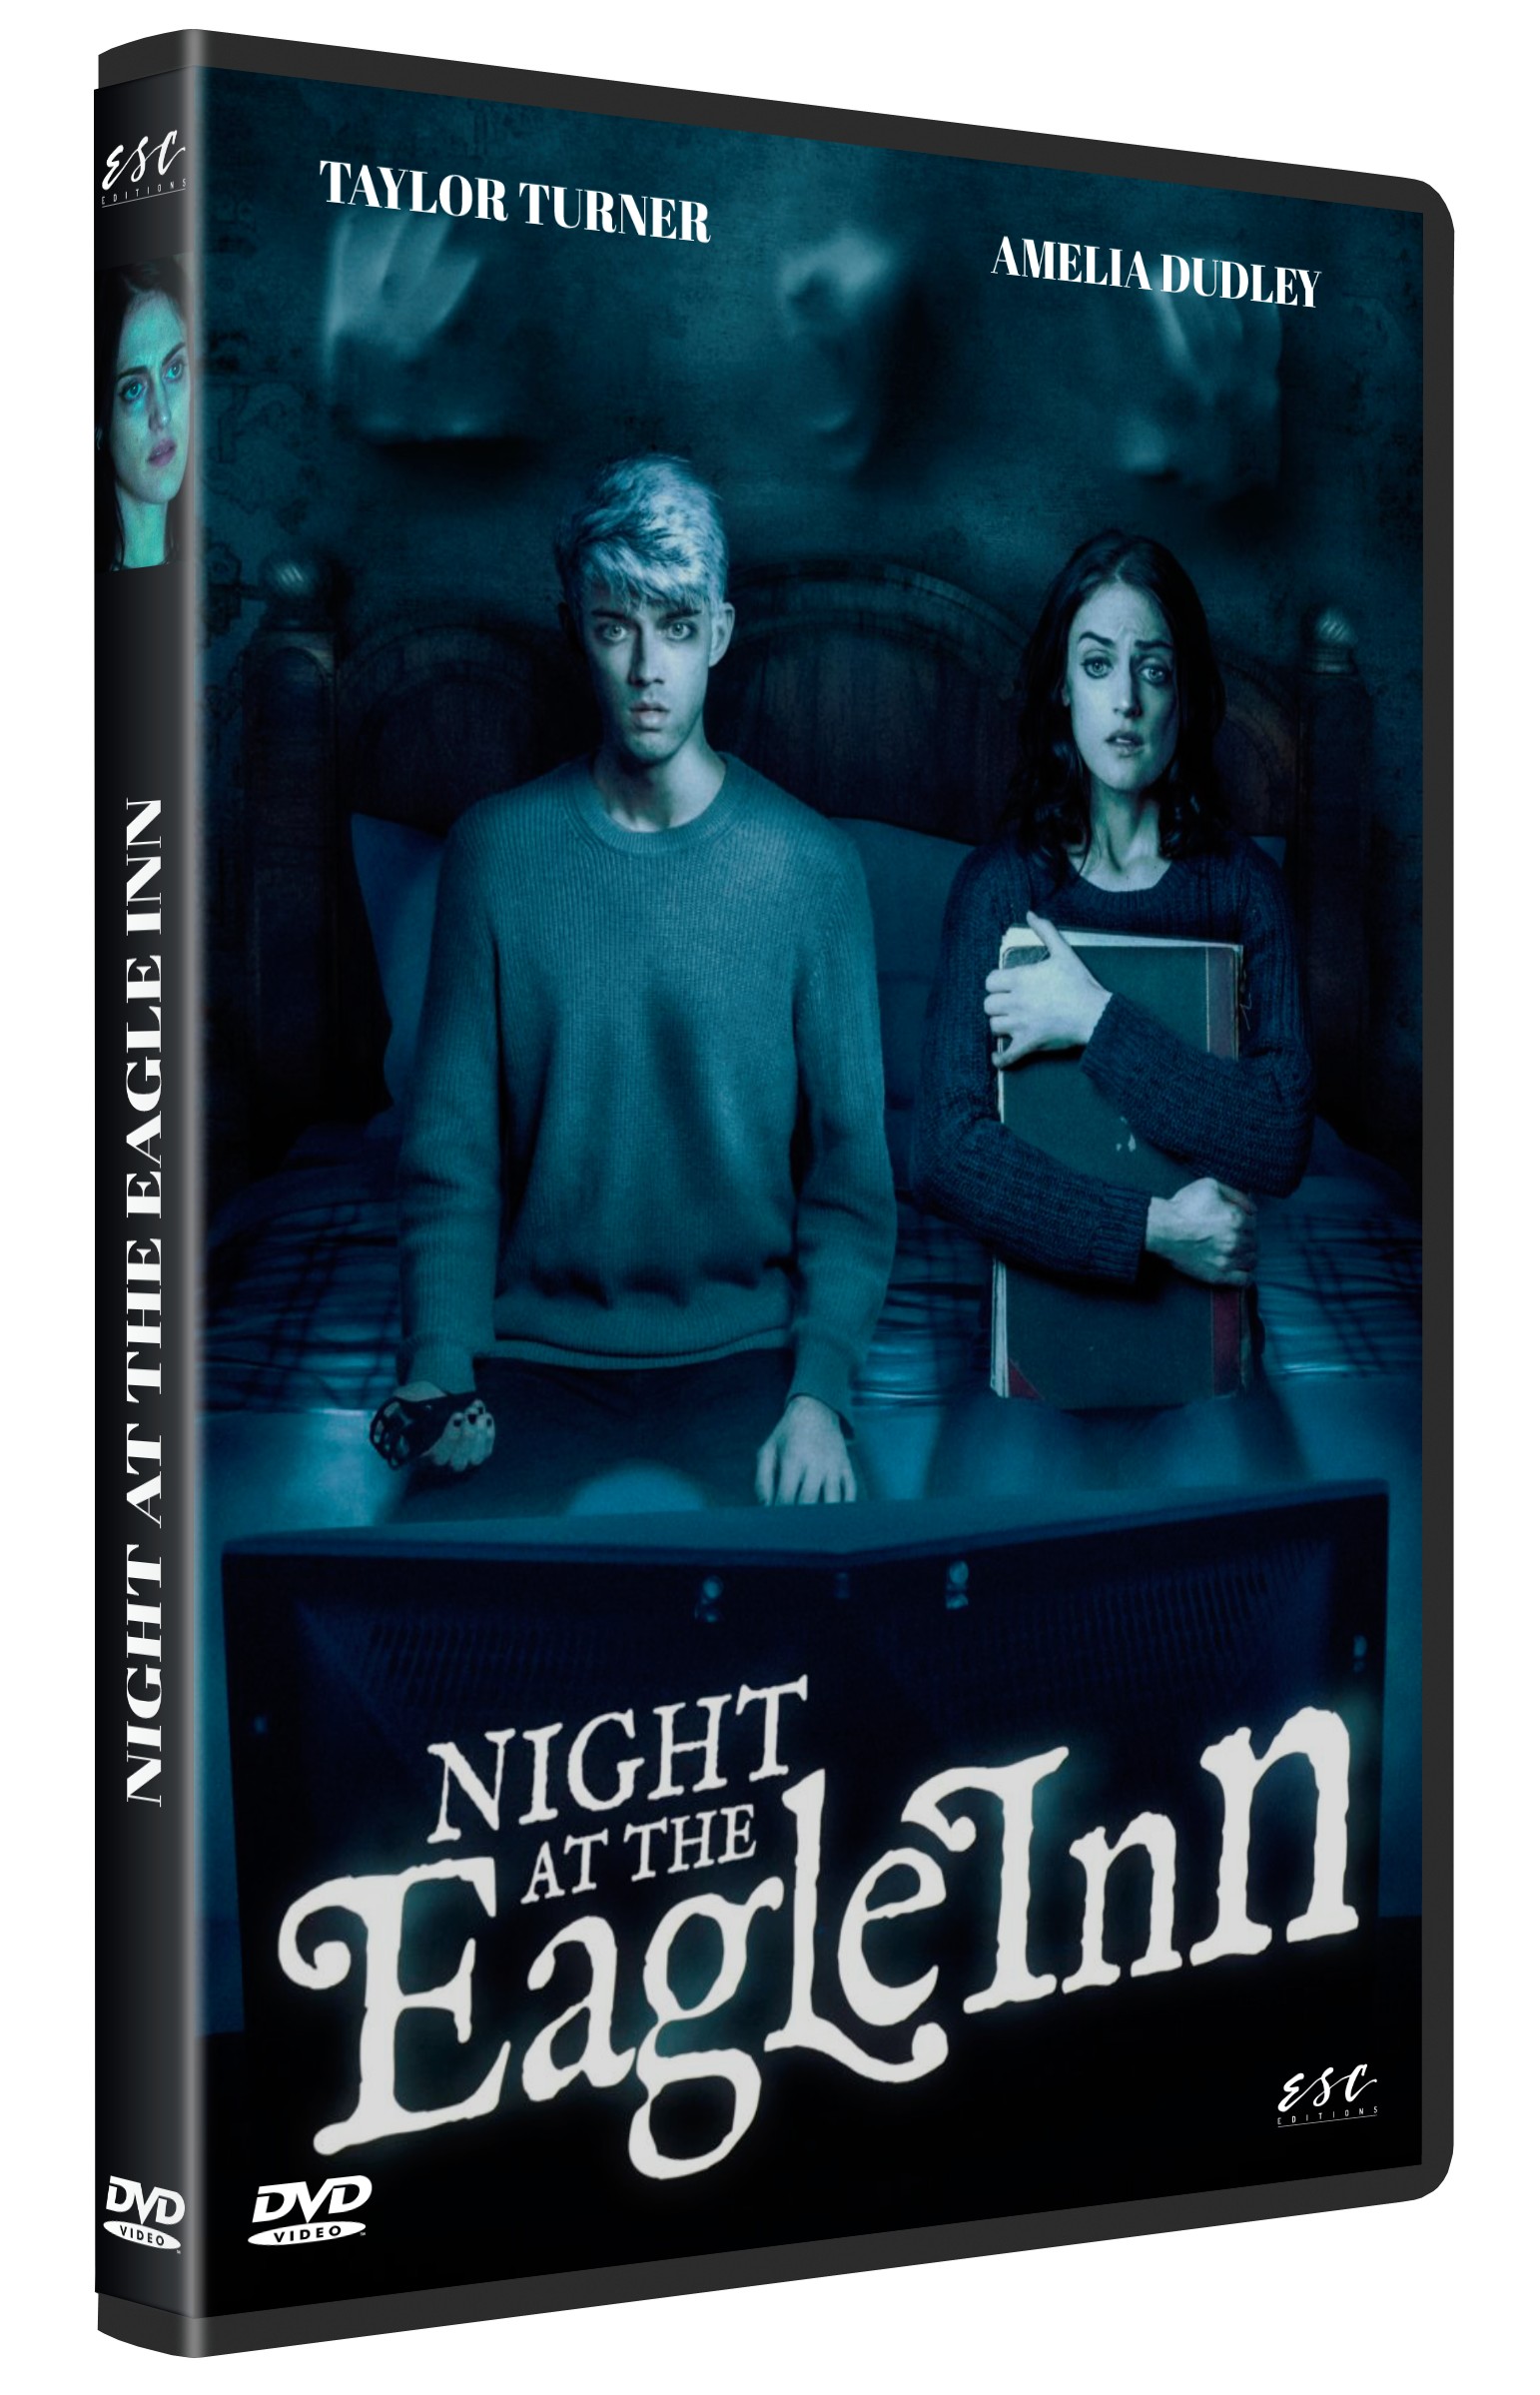 NIGHT AT THE EAGLE INN - DVD